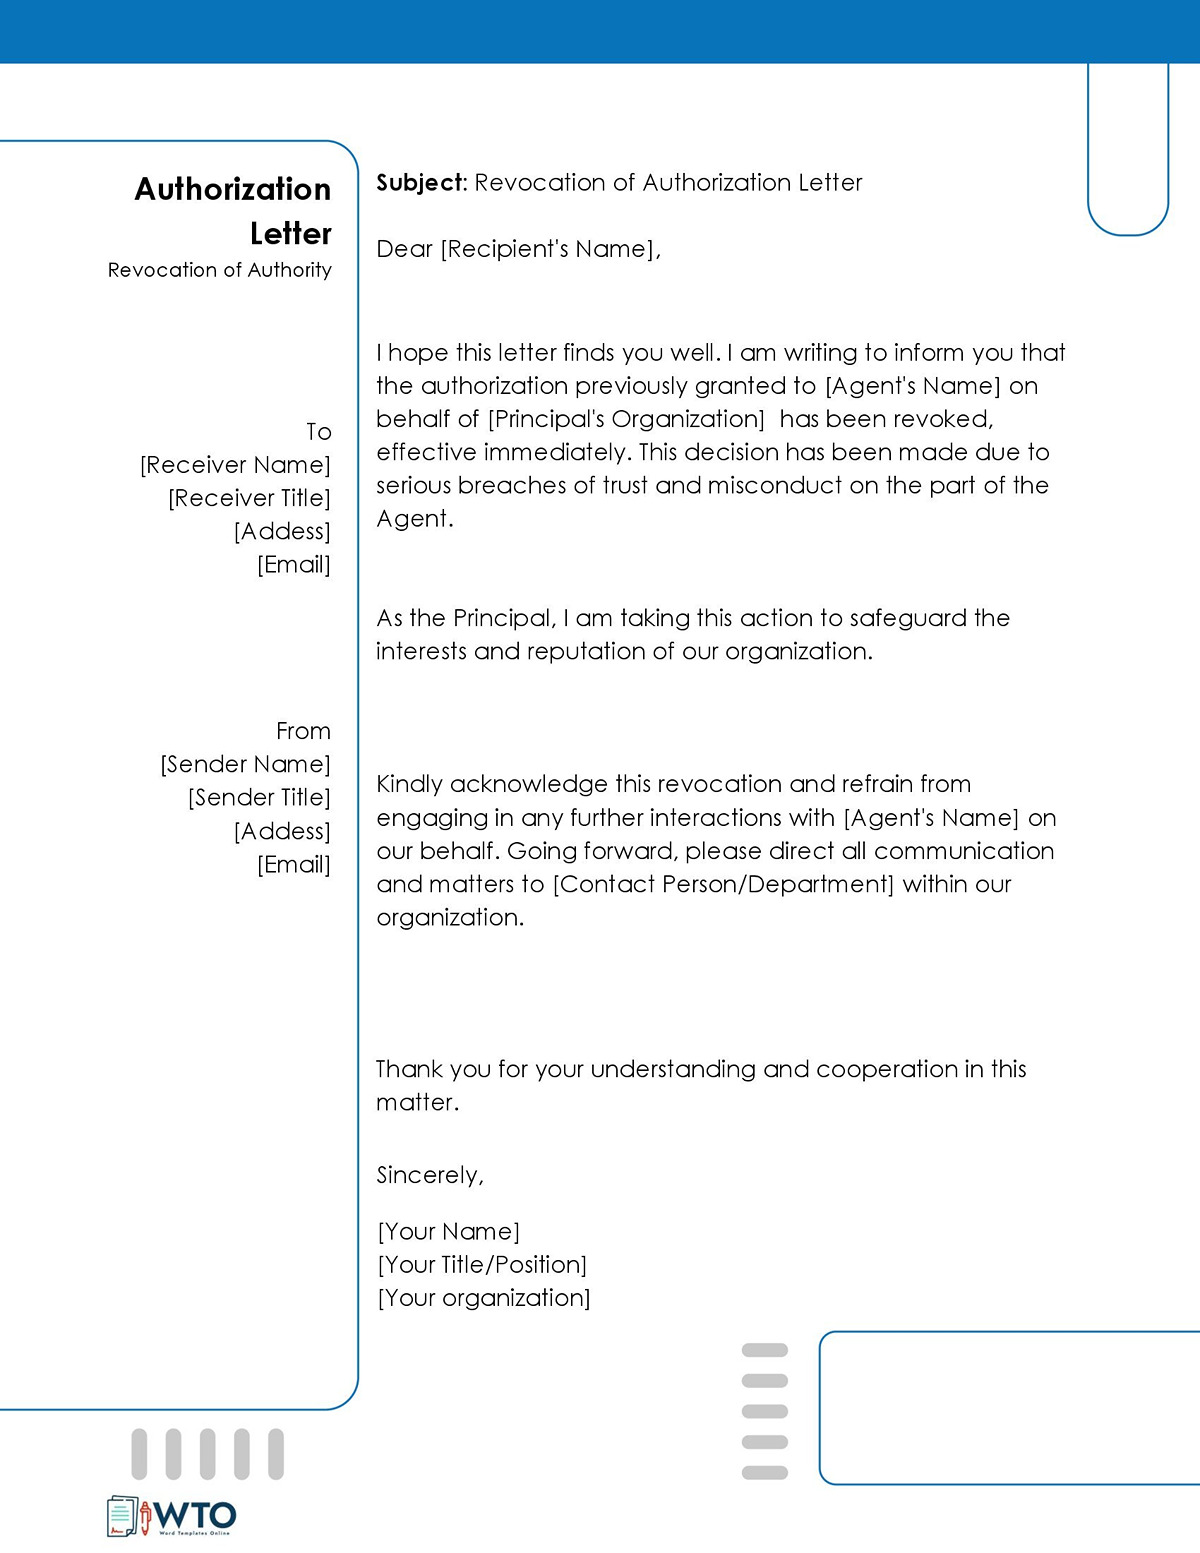 Revoke Authorization LetterTemplate-Free in Ms Word